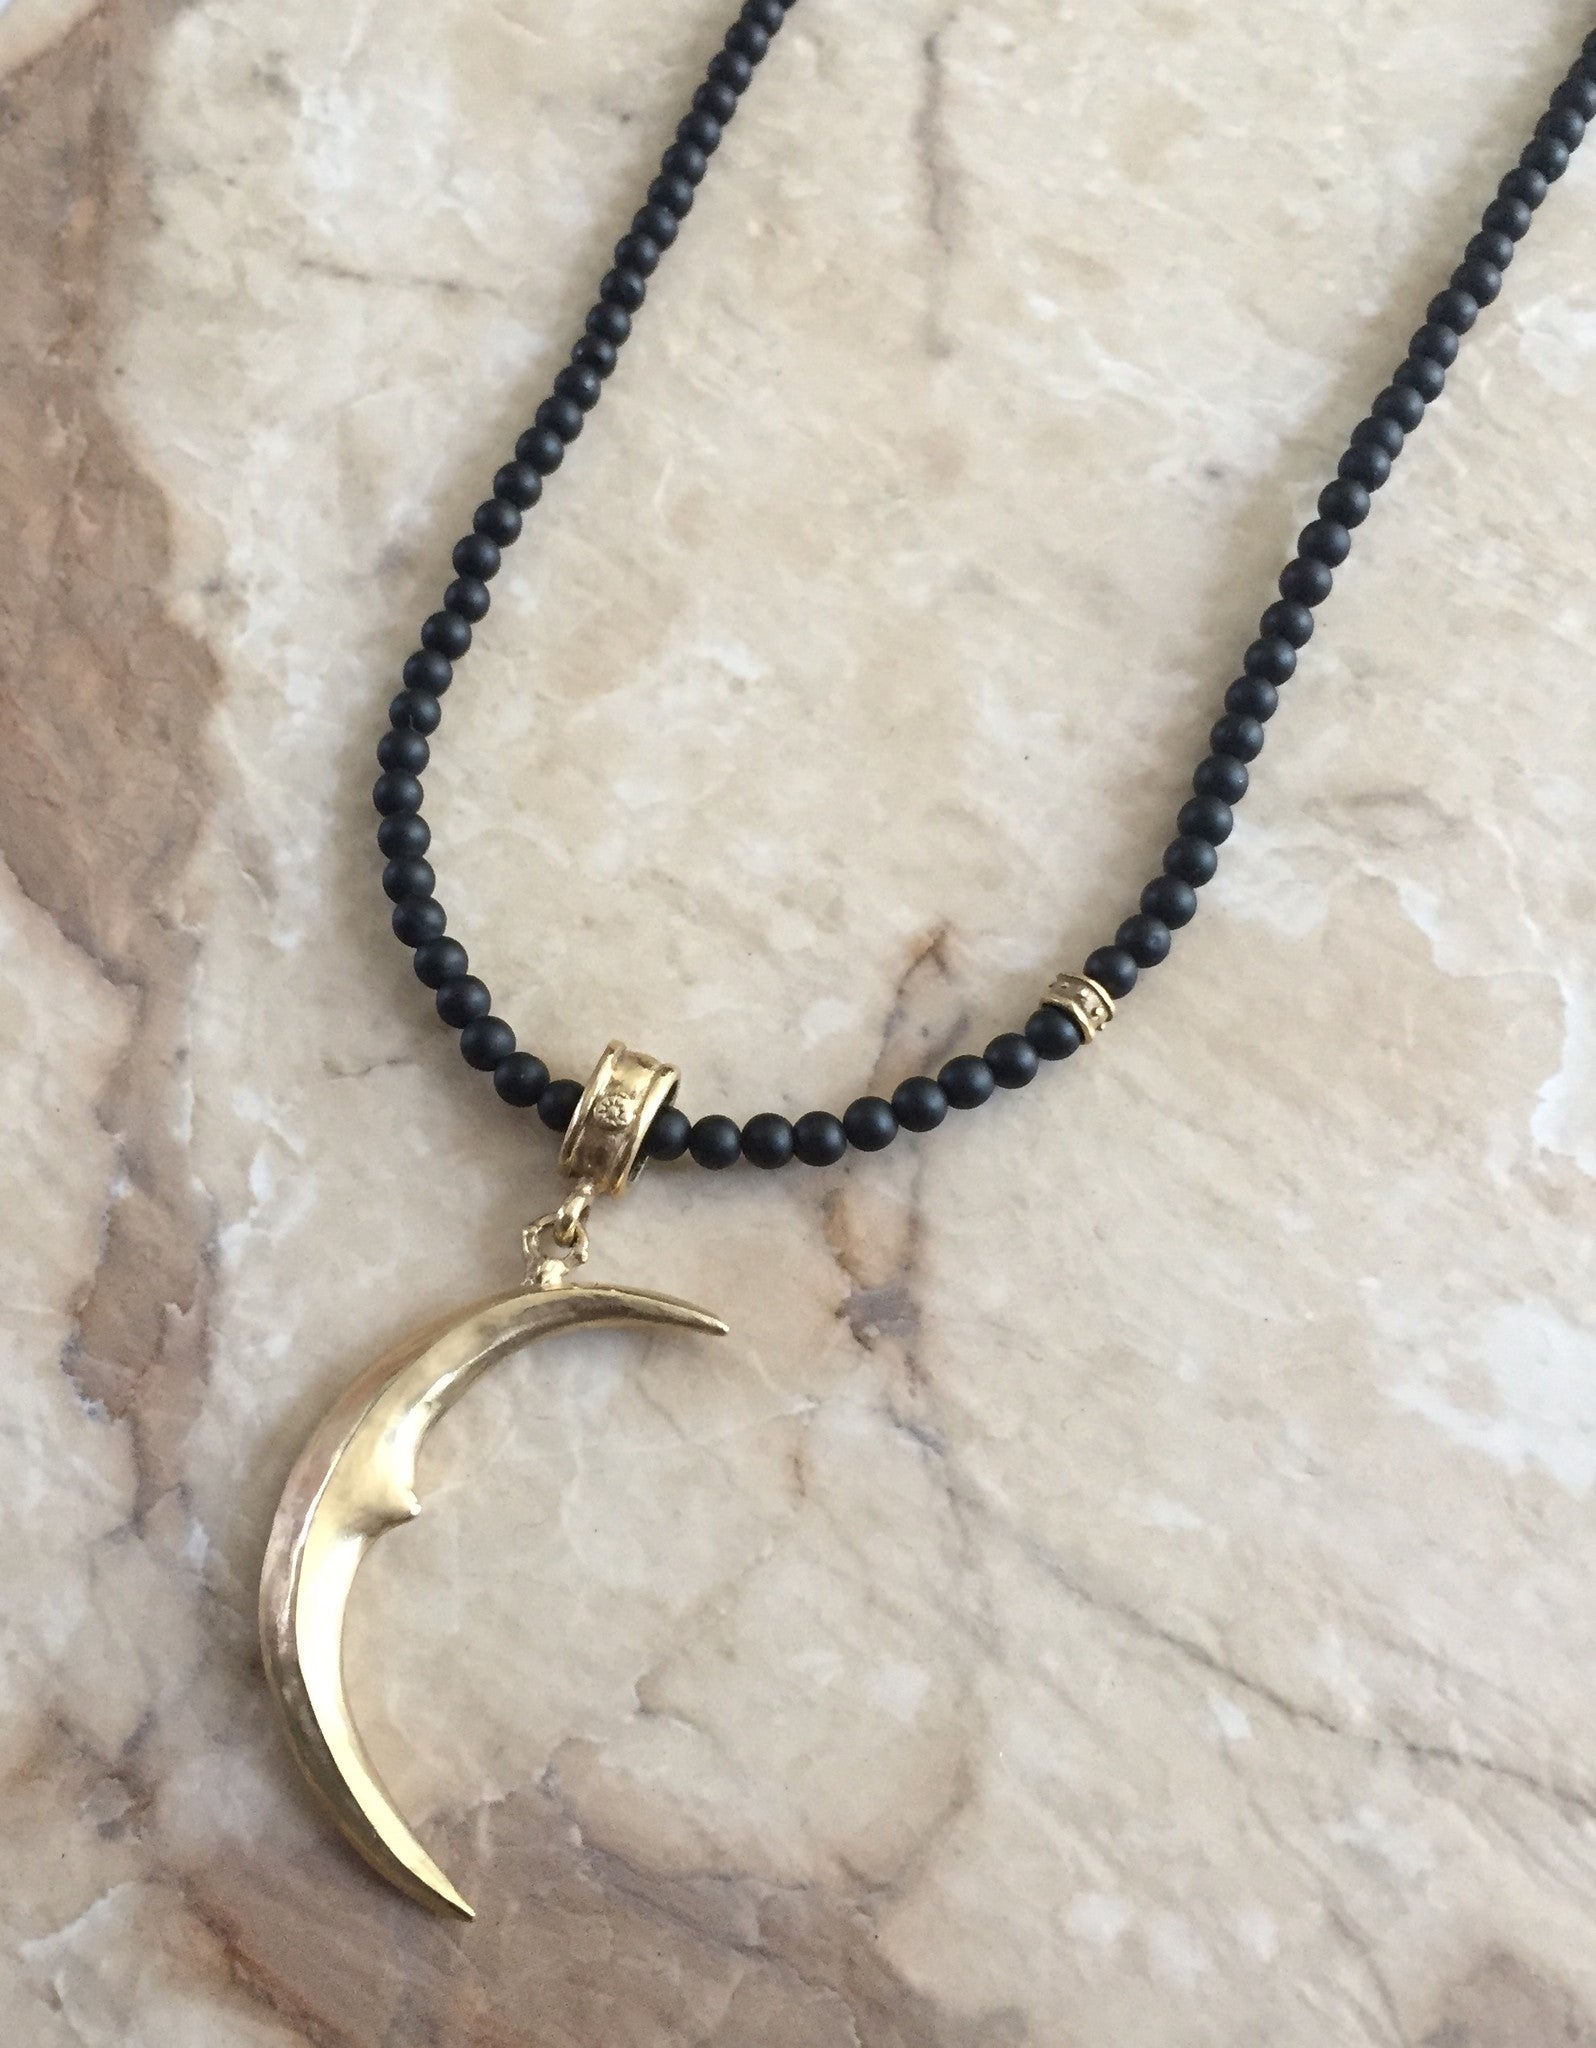 Necklace - Golden Crescent Moon by Roman Paul